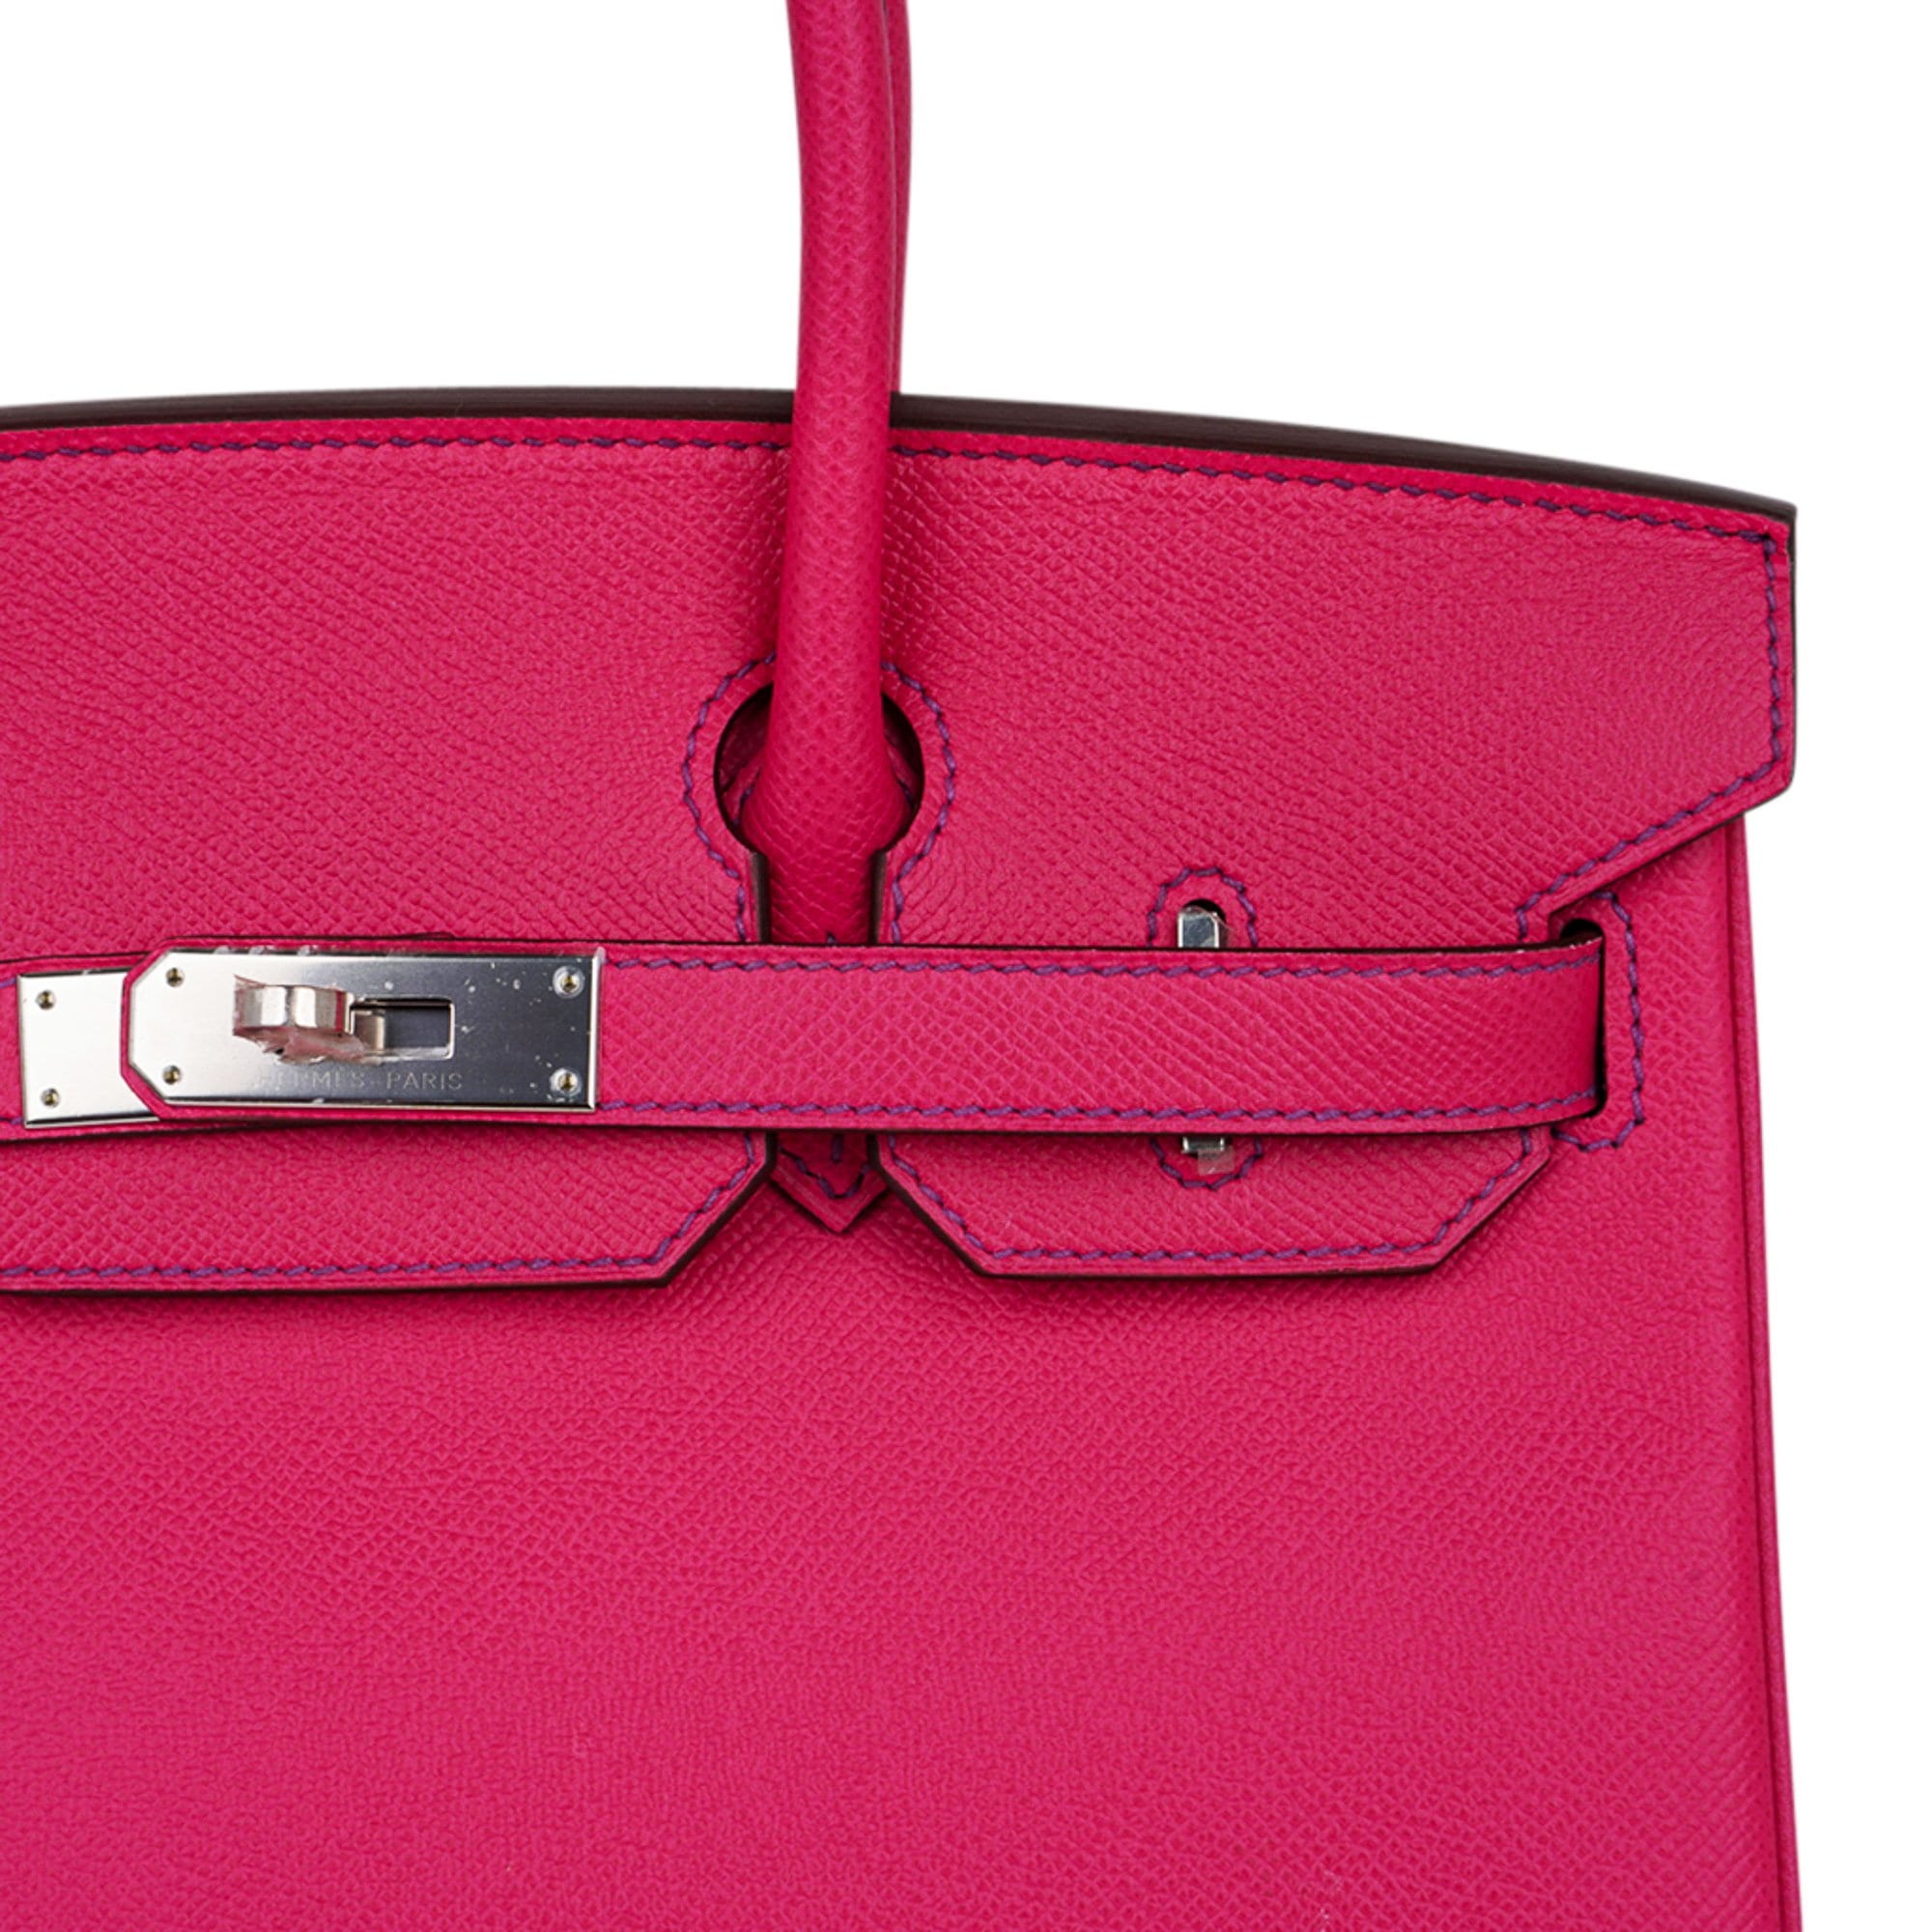 Sold at Auction: Hermes Birkin 30 Bag HSS, Pink Rose Tyrien, Blue